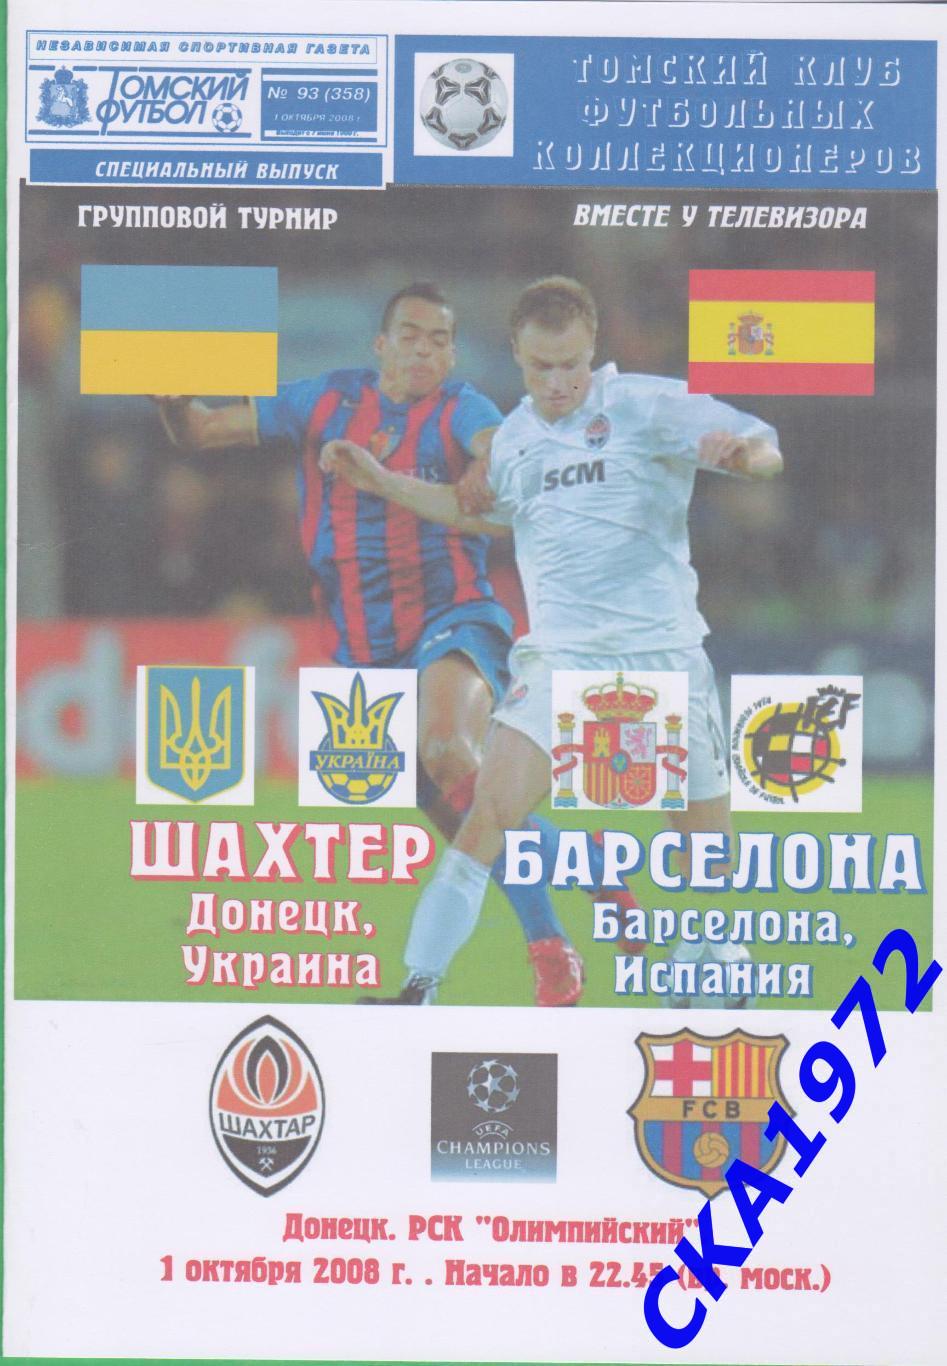 программа Шахтер Донецк Украина - Барселона Испания 2008 Лига чемпионов